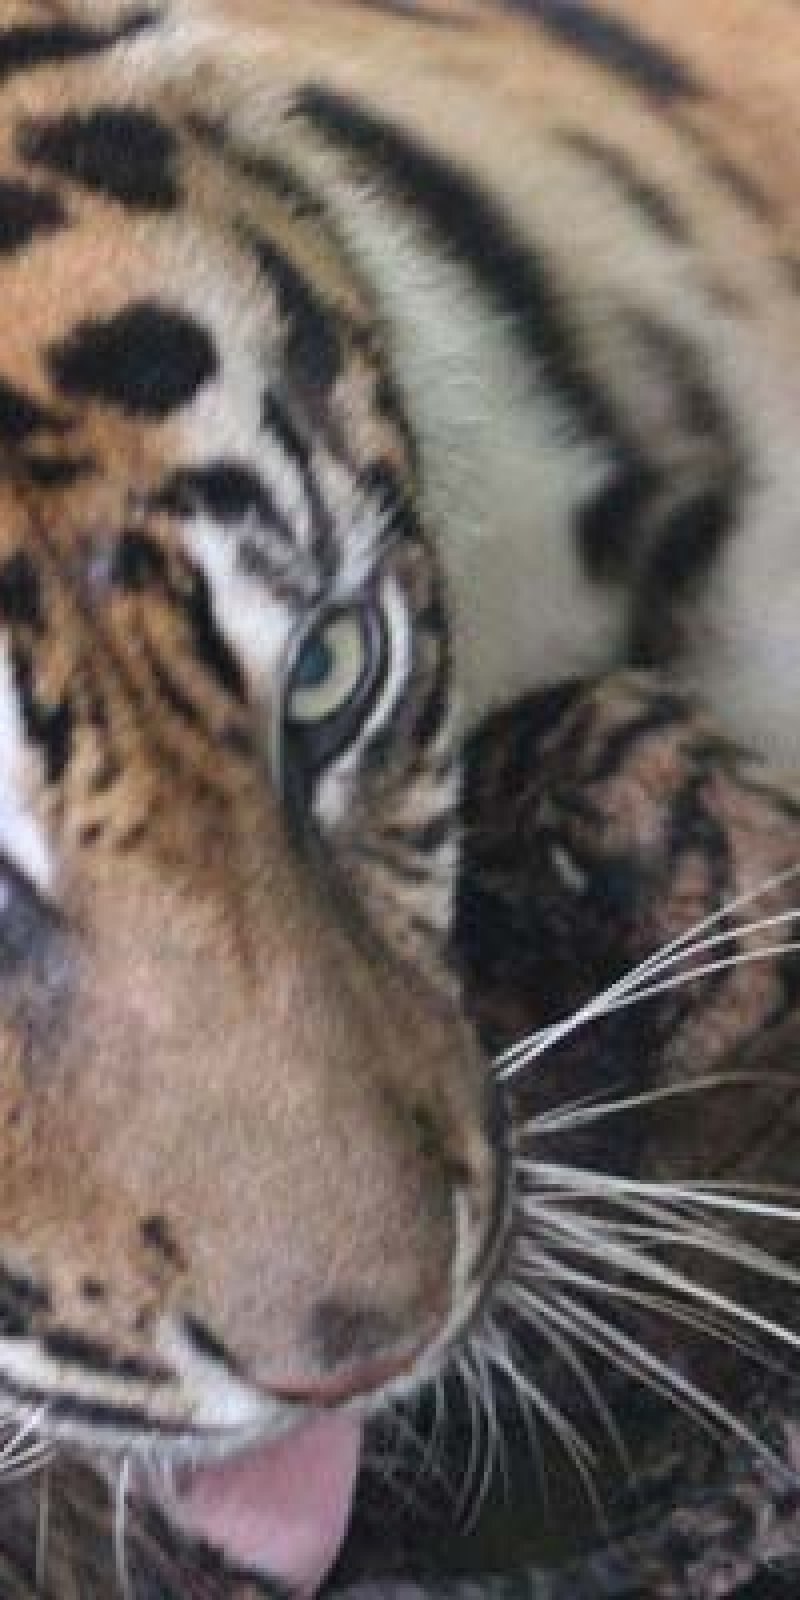 Harimau Terkam Karyawati Di Indragiri Hilir Antara News Bali